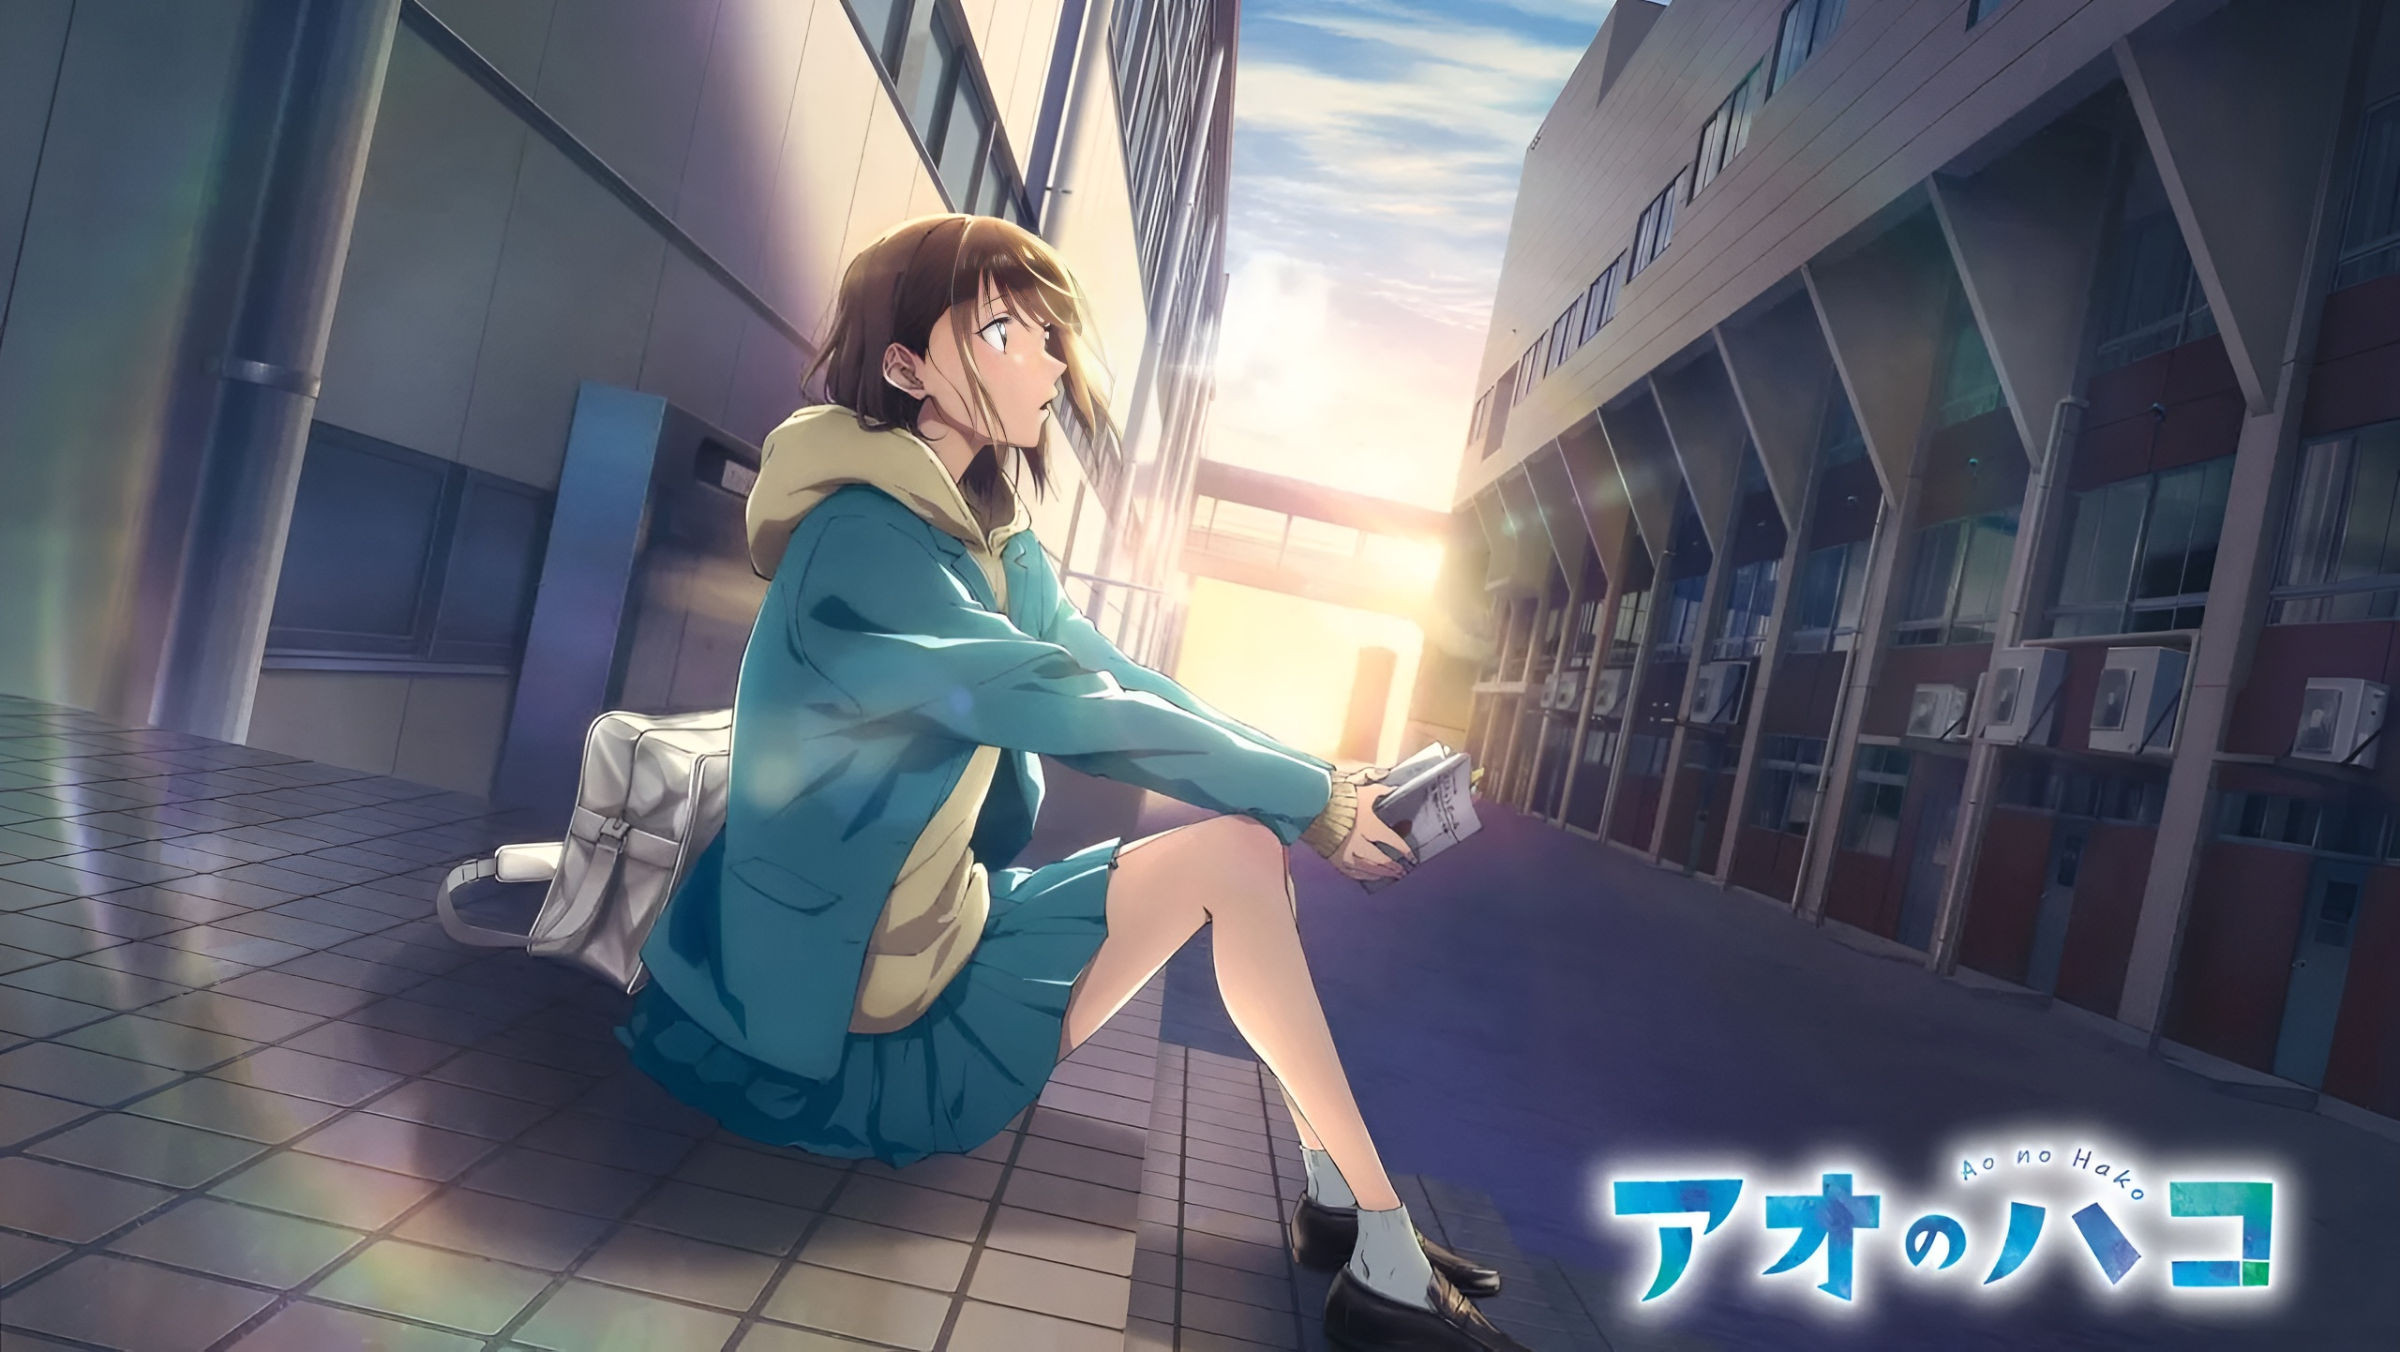 Blue Box Romance Manga To Get Anime